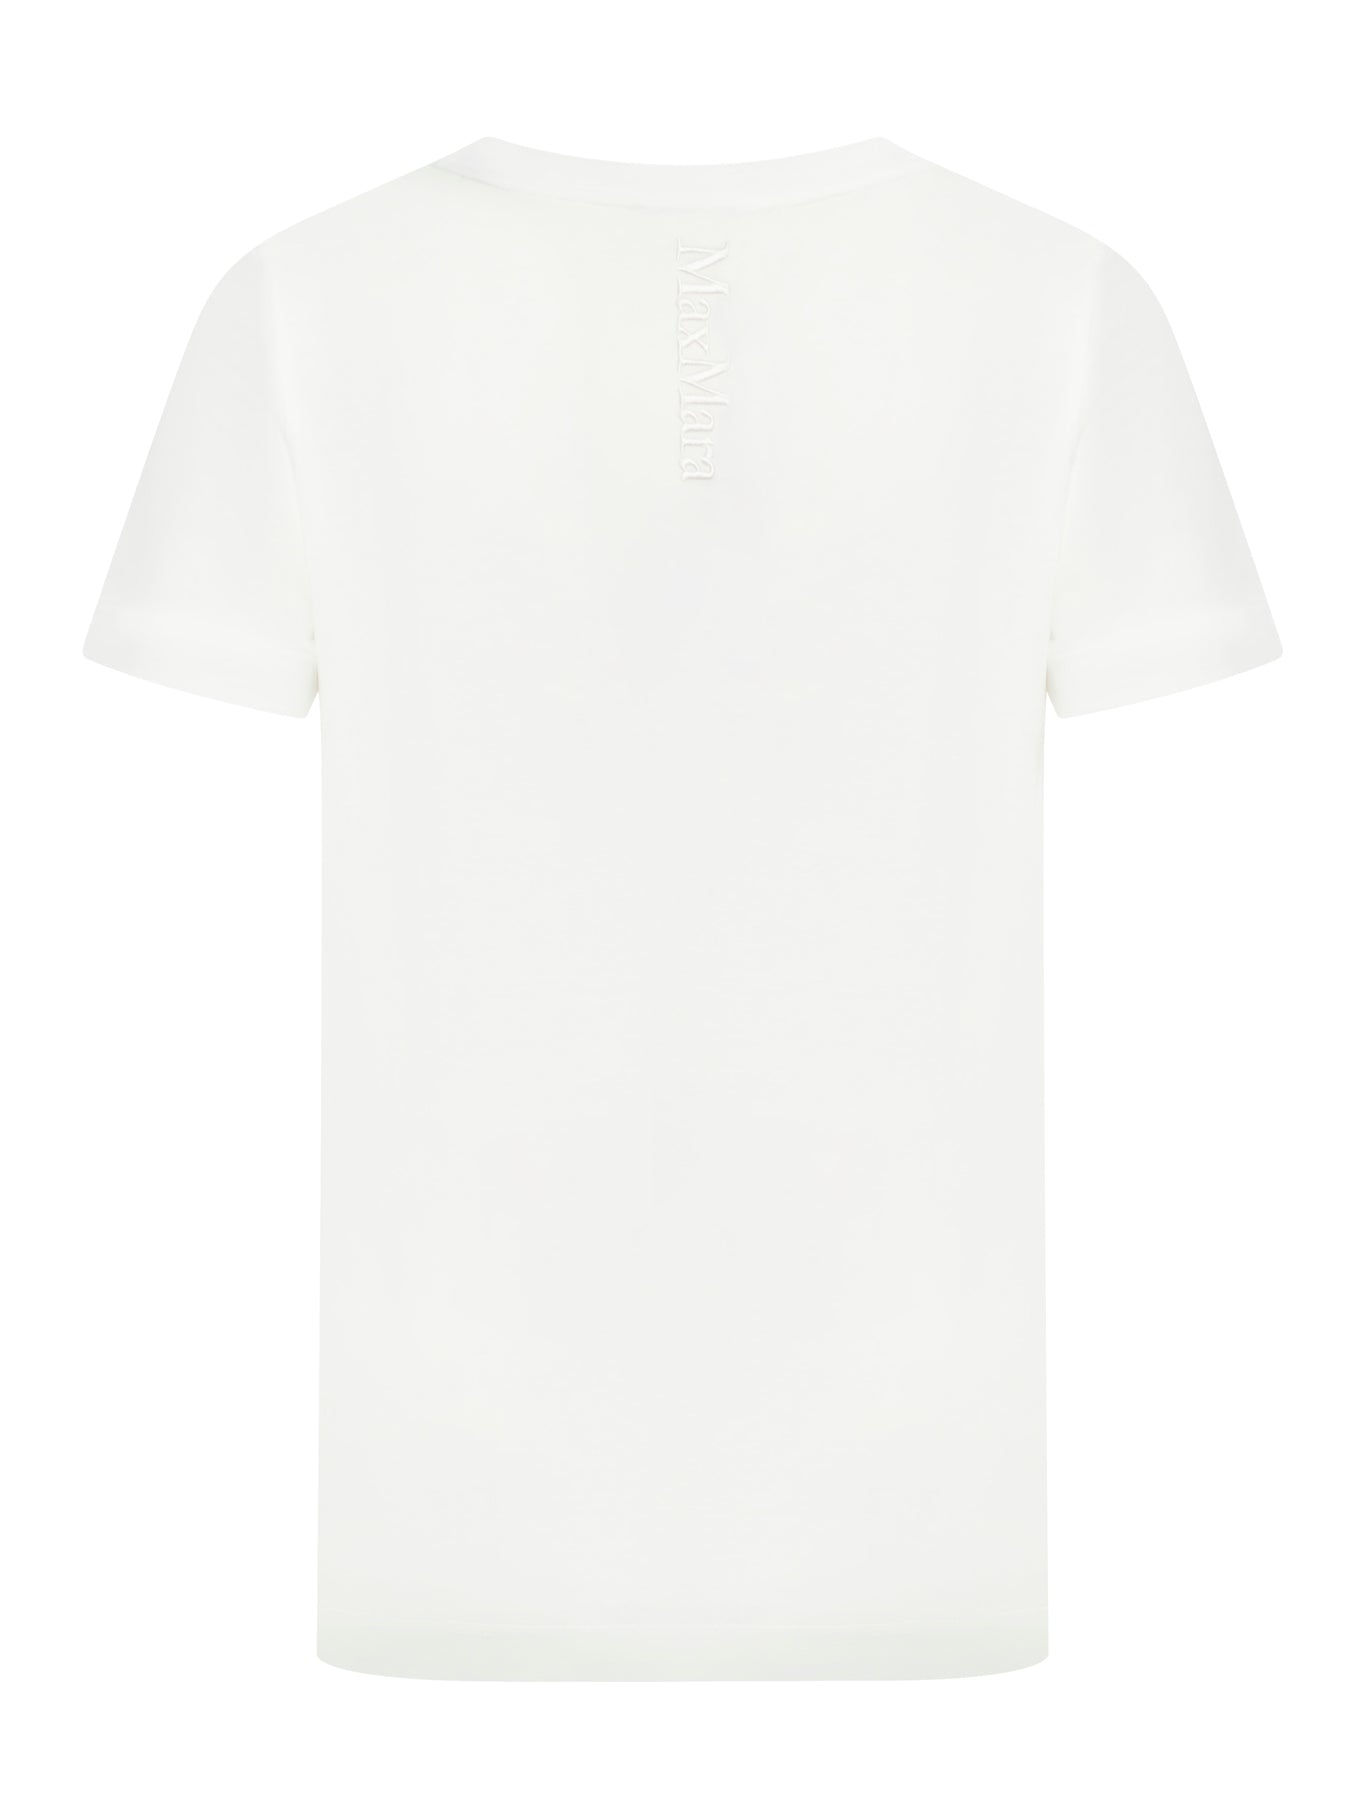 quinta t-shirt in cotton